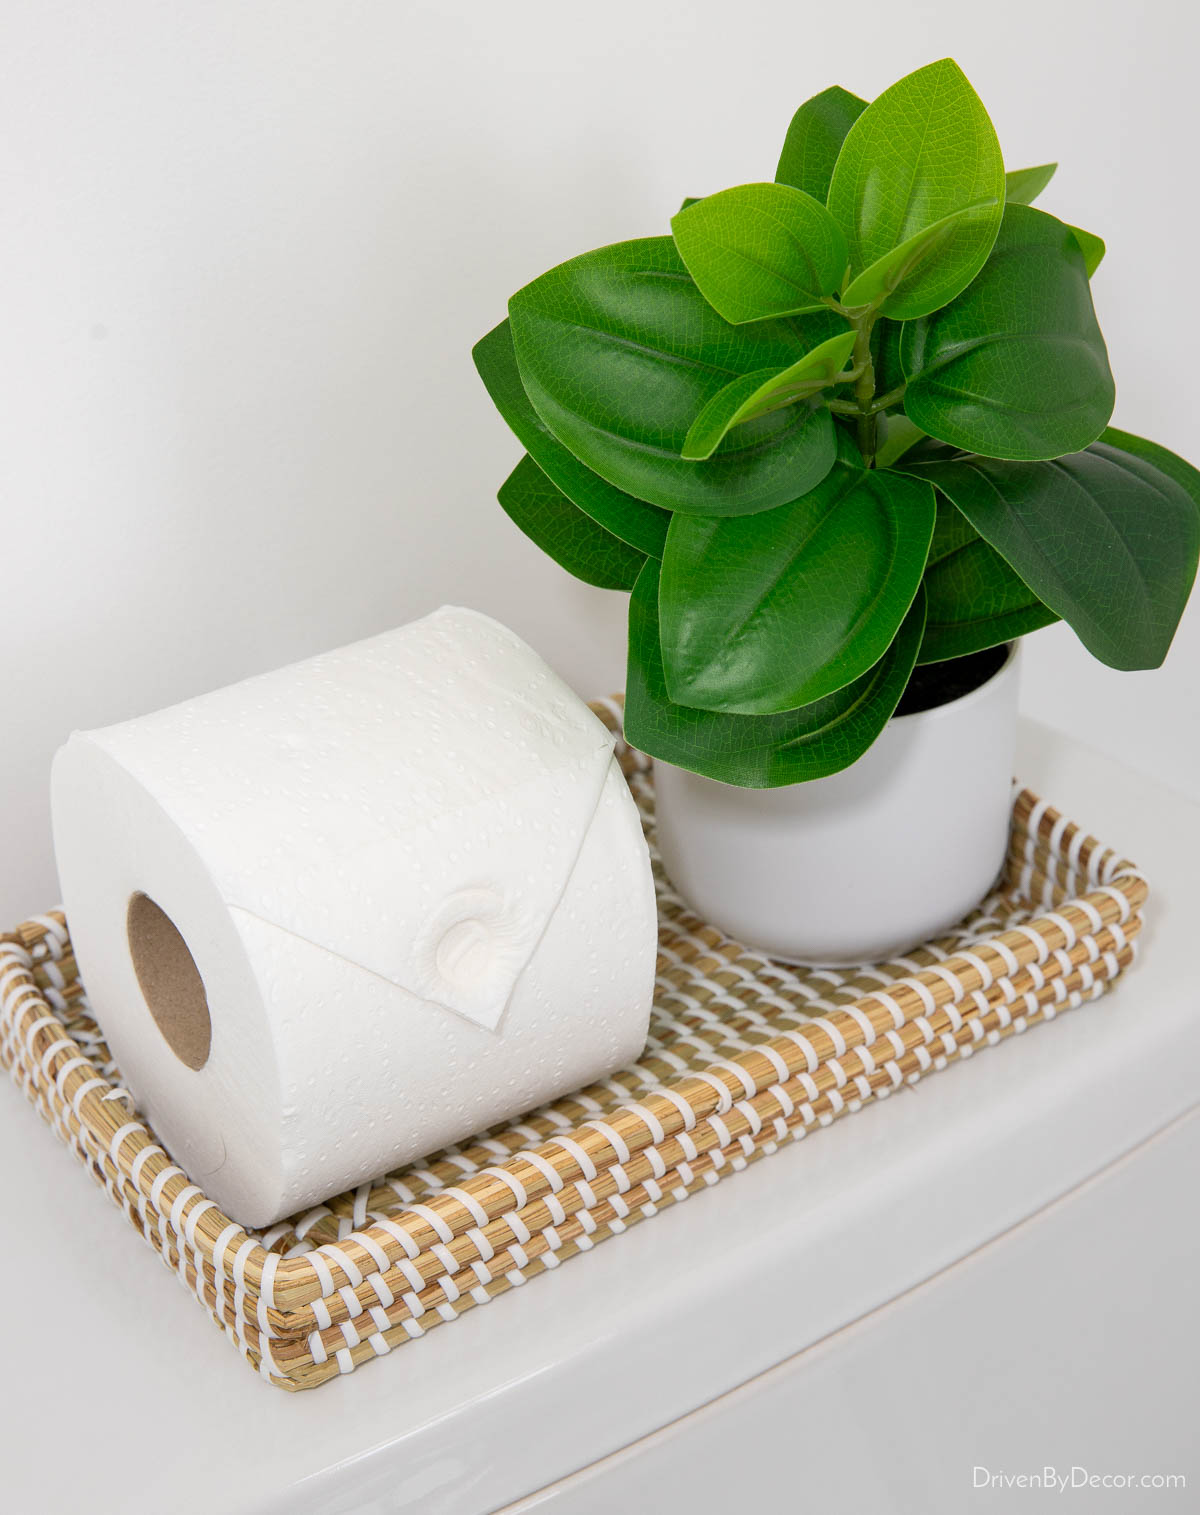 Woven toilet tray and small plant as a toilet tank decor idea